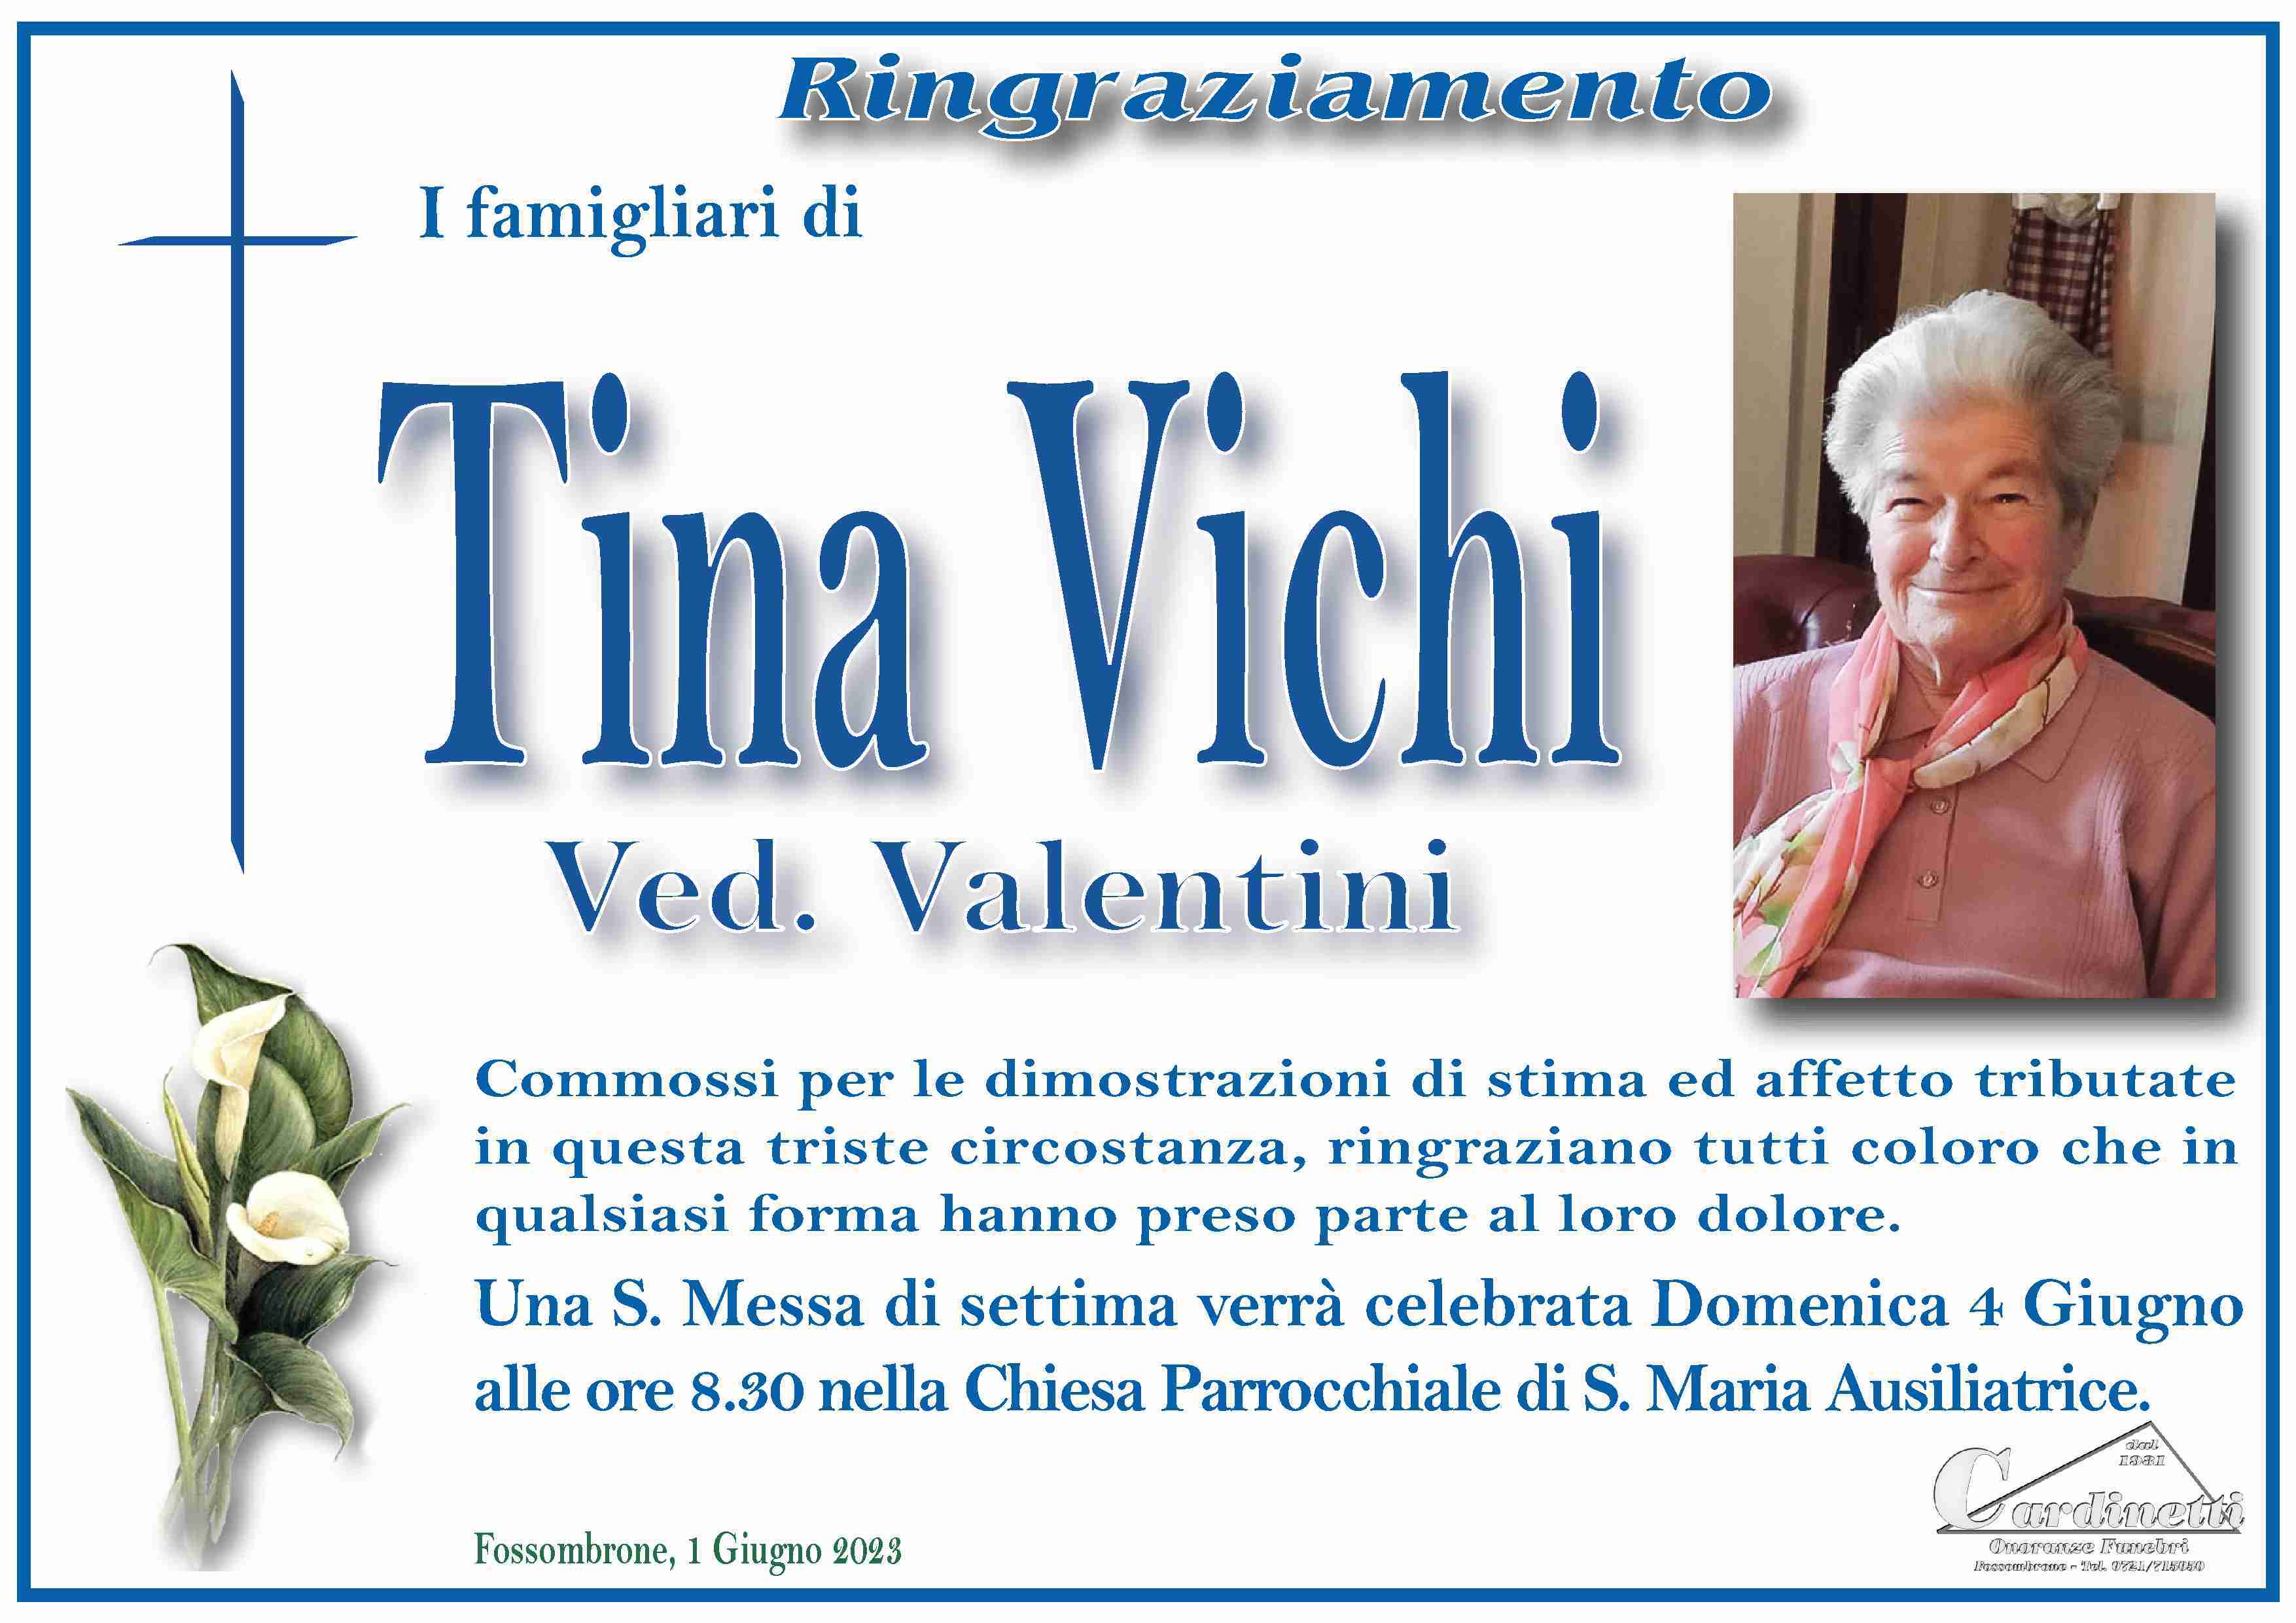 Tina Vichi